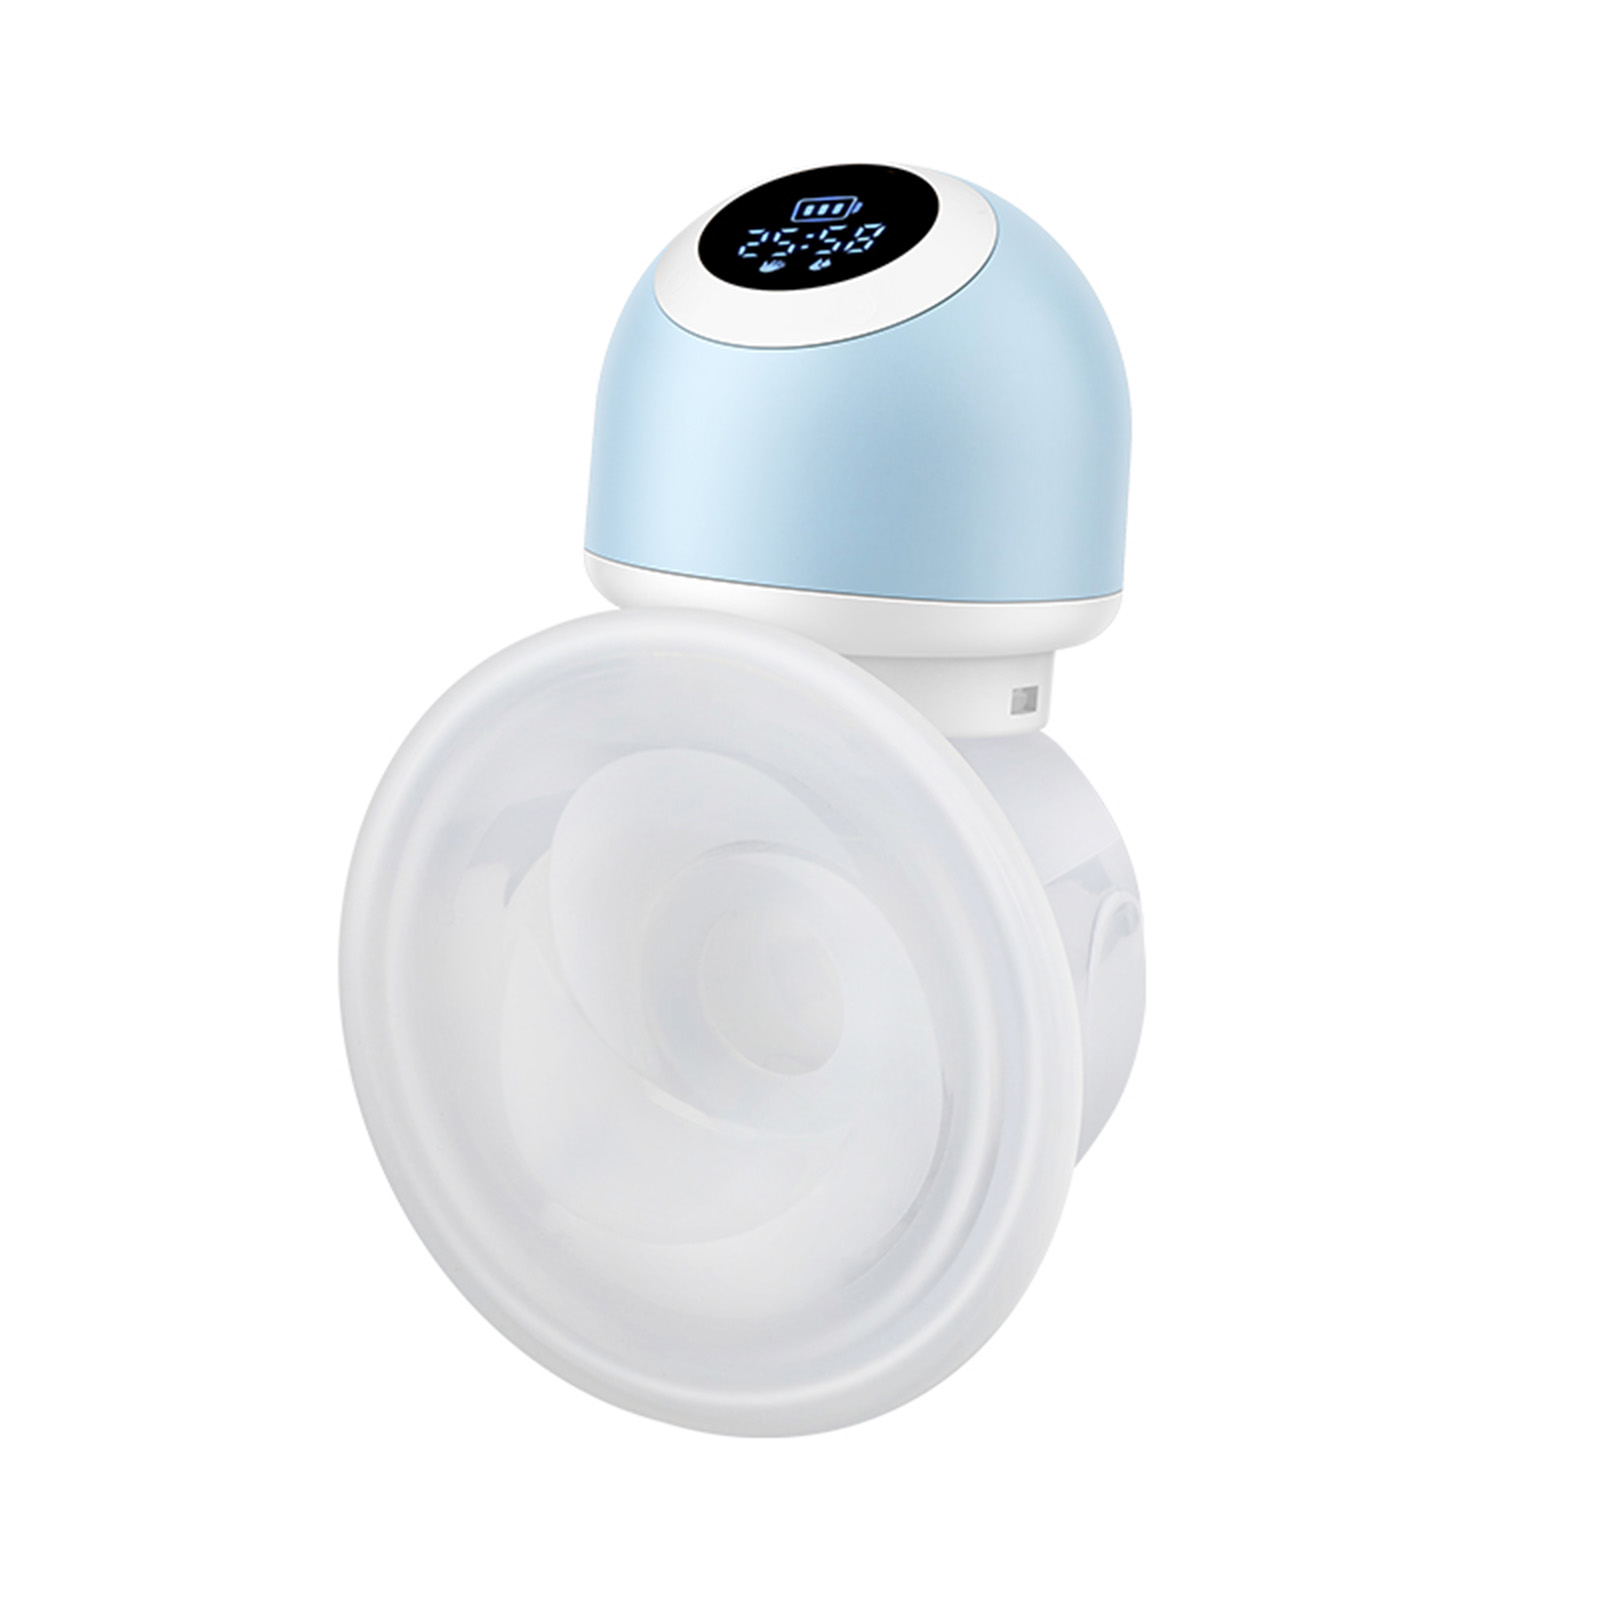 Electric Breast Pump Manual Milk Pump Lightweight Ergonomic Design Food-grade Material with LED Display 9 Adjustable Suction Levels - ShopShipShake